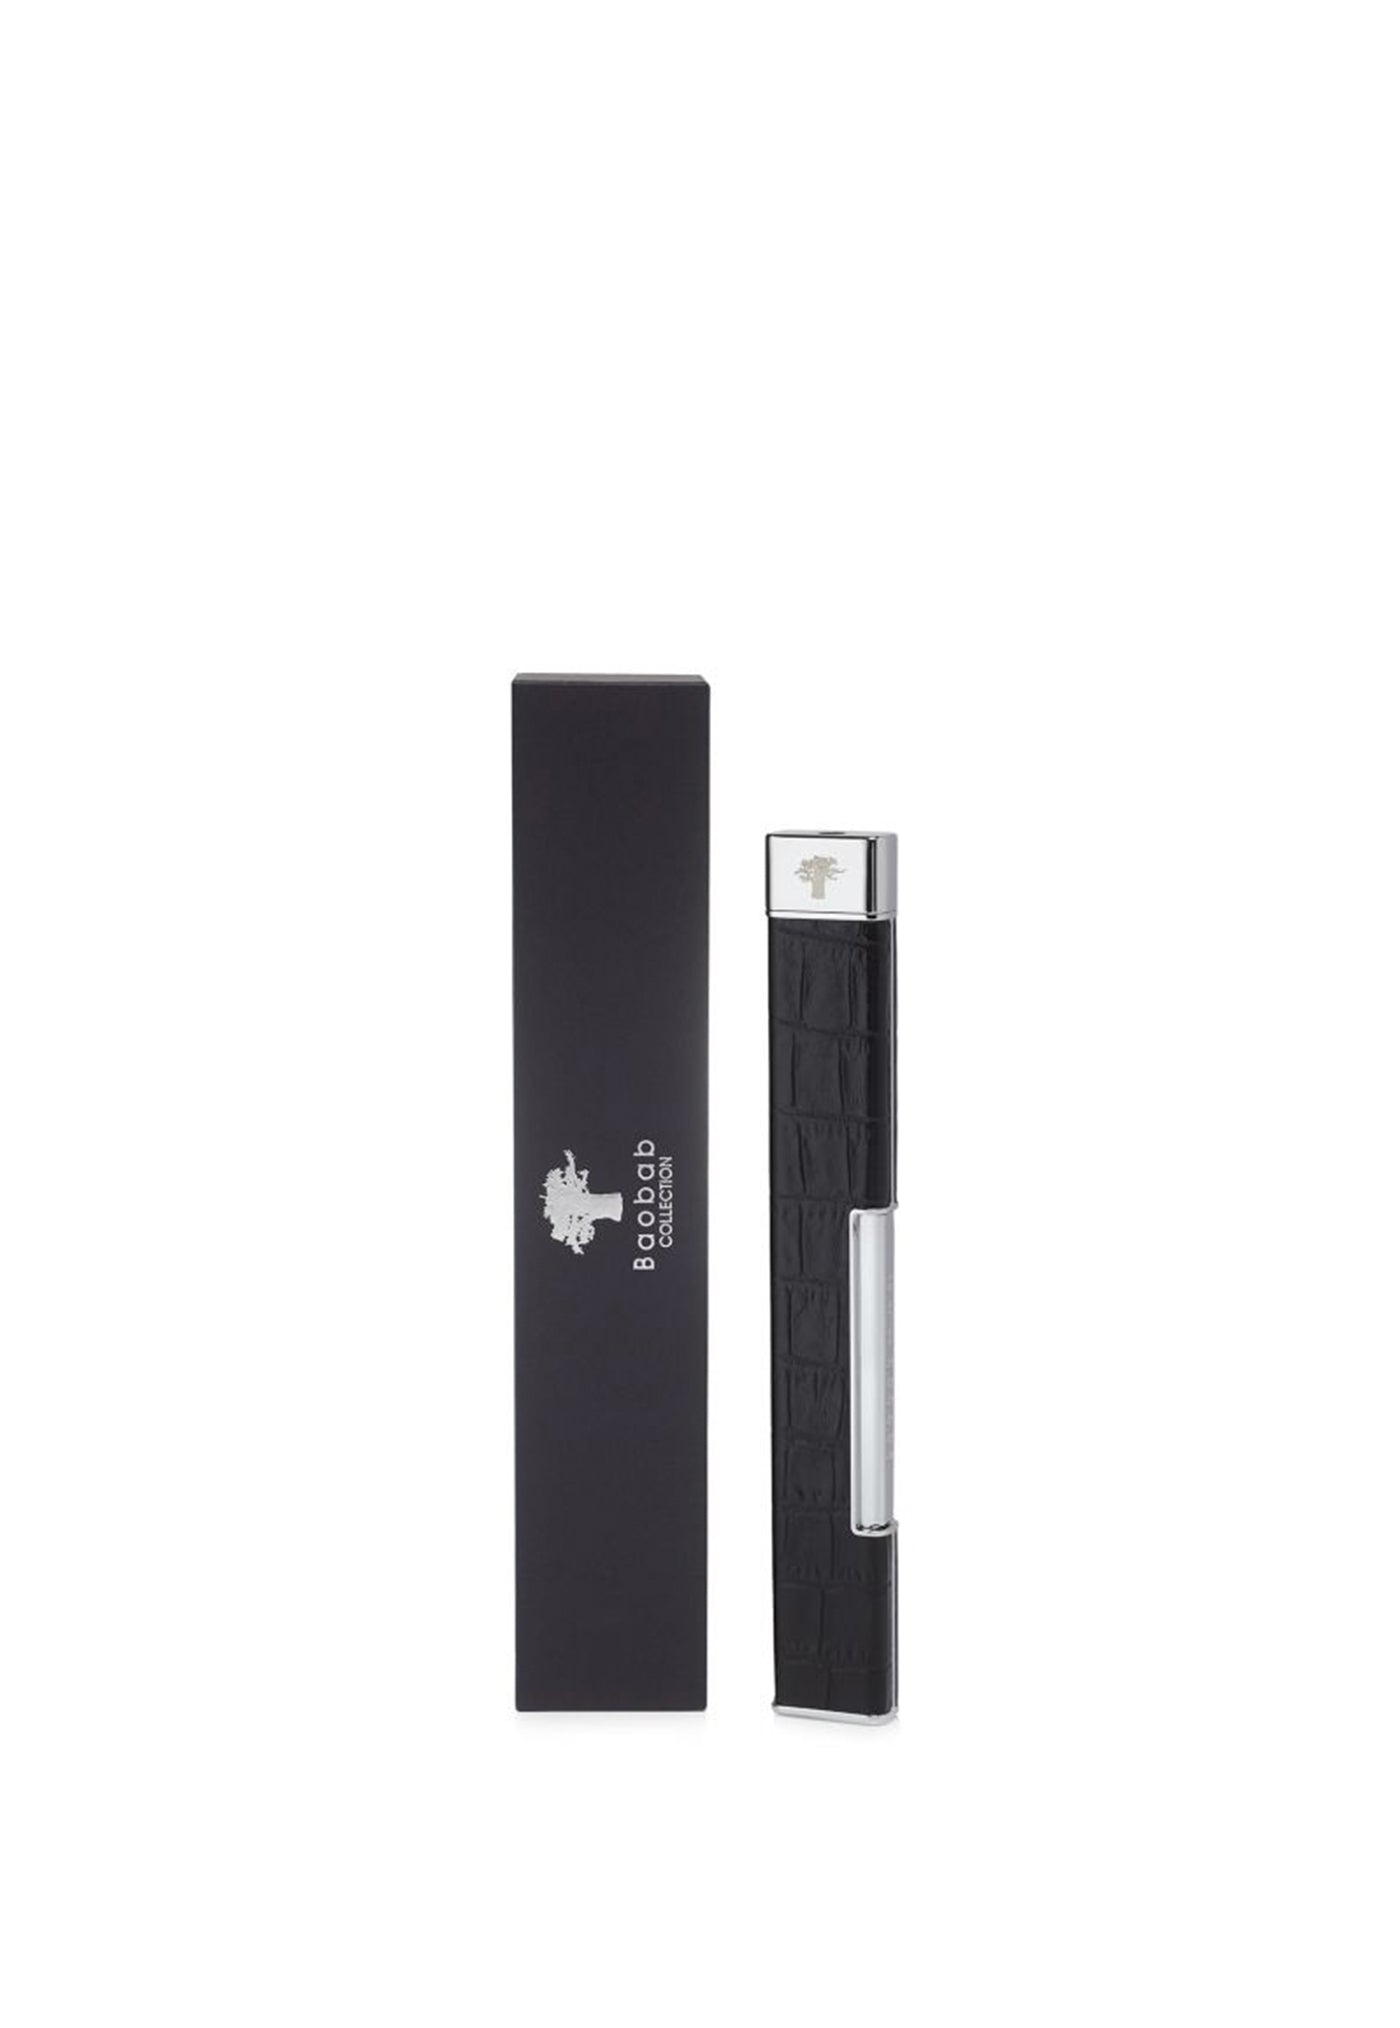 Lighter - Croco Noir sold by Angel Divine